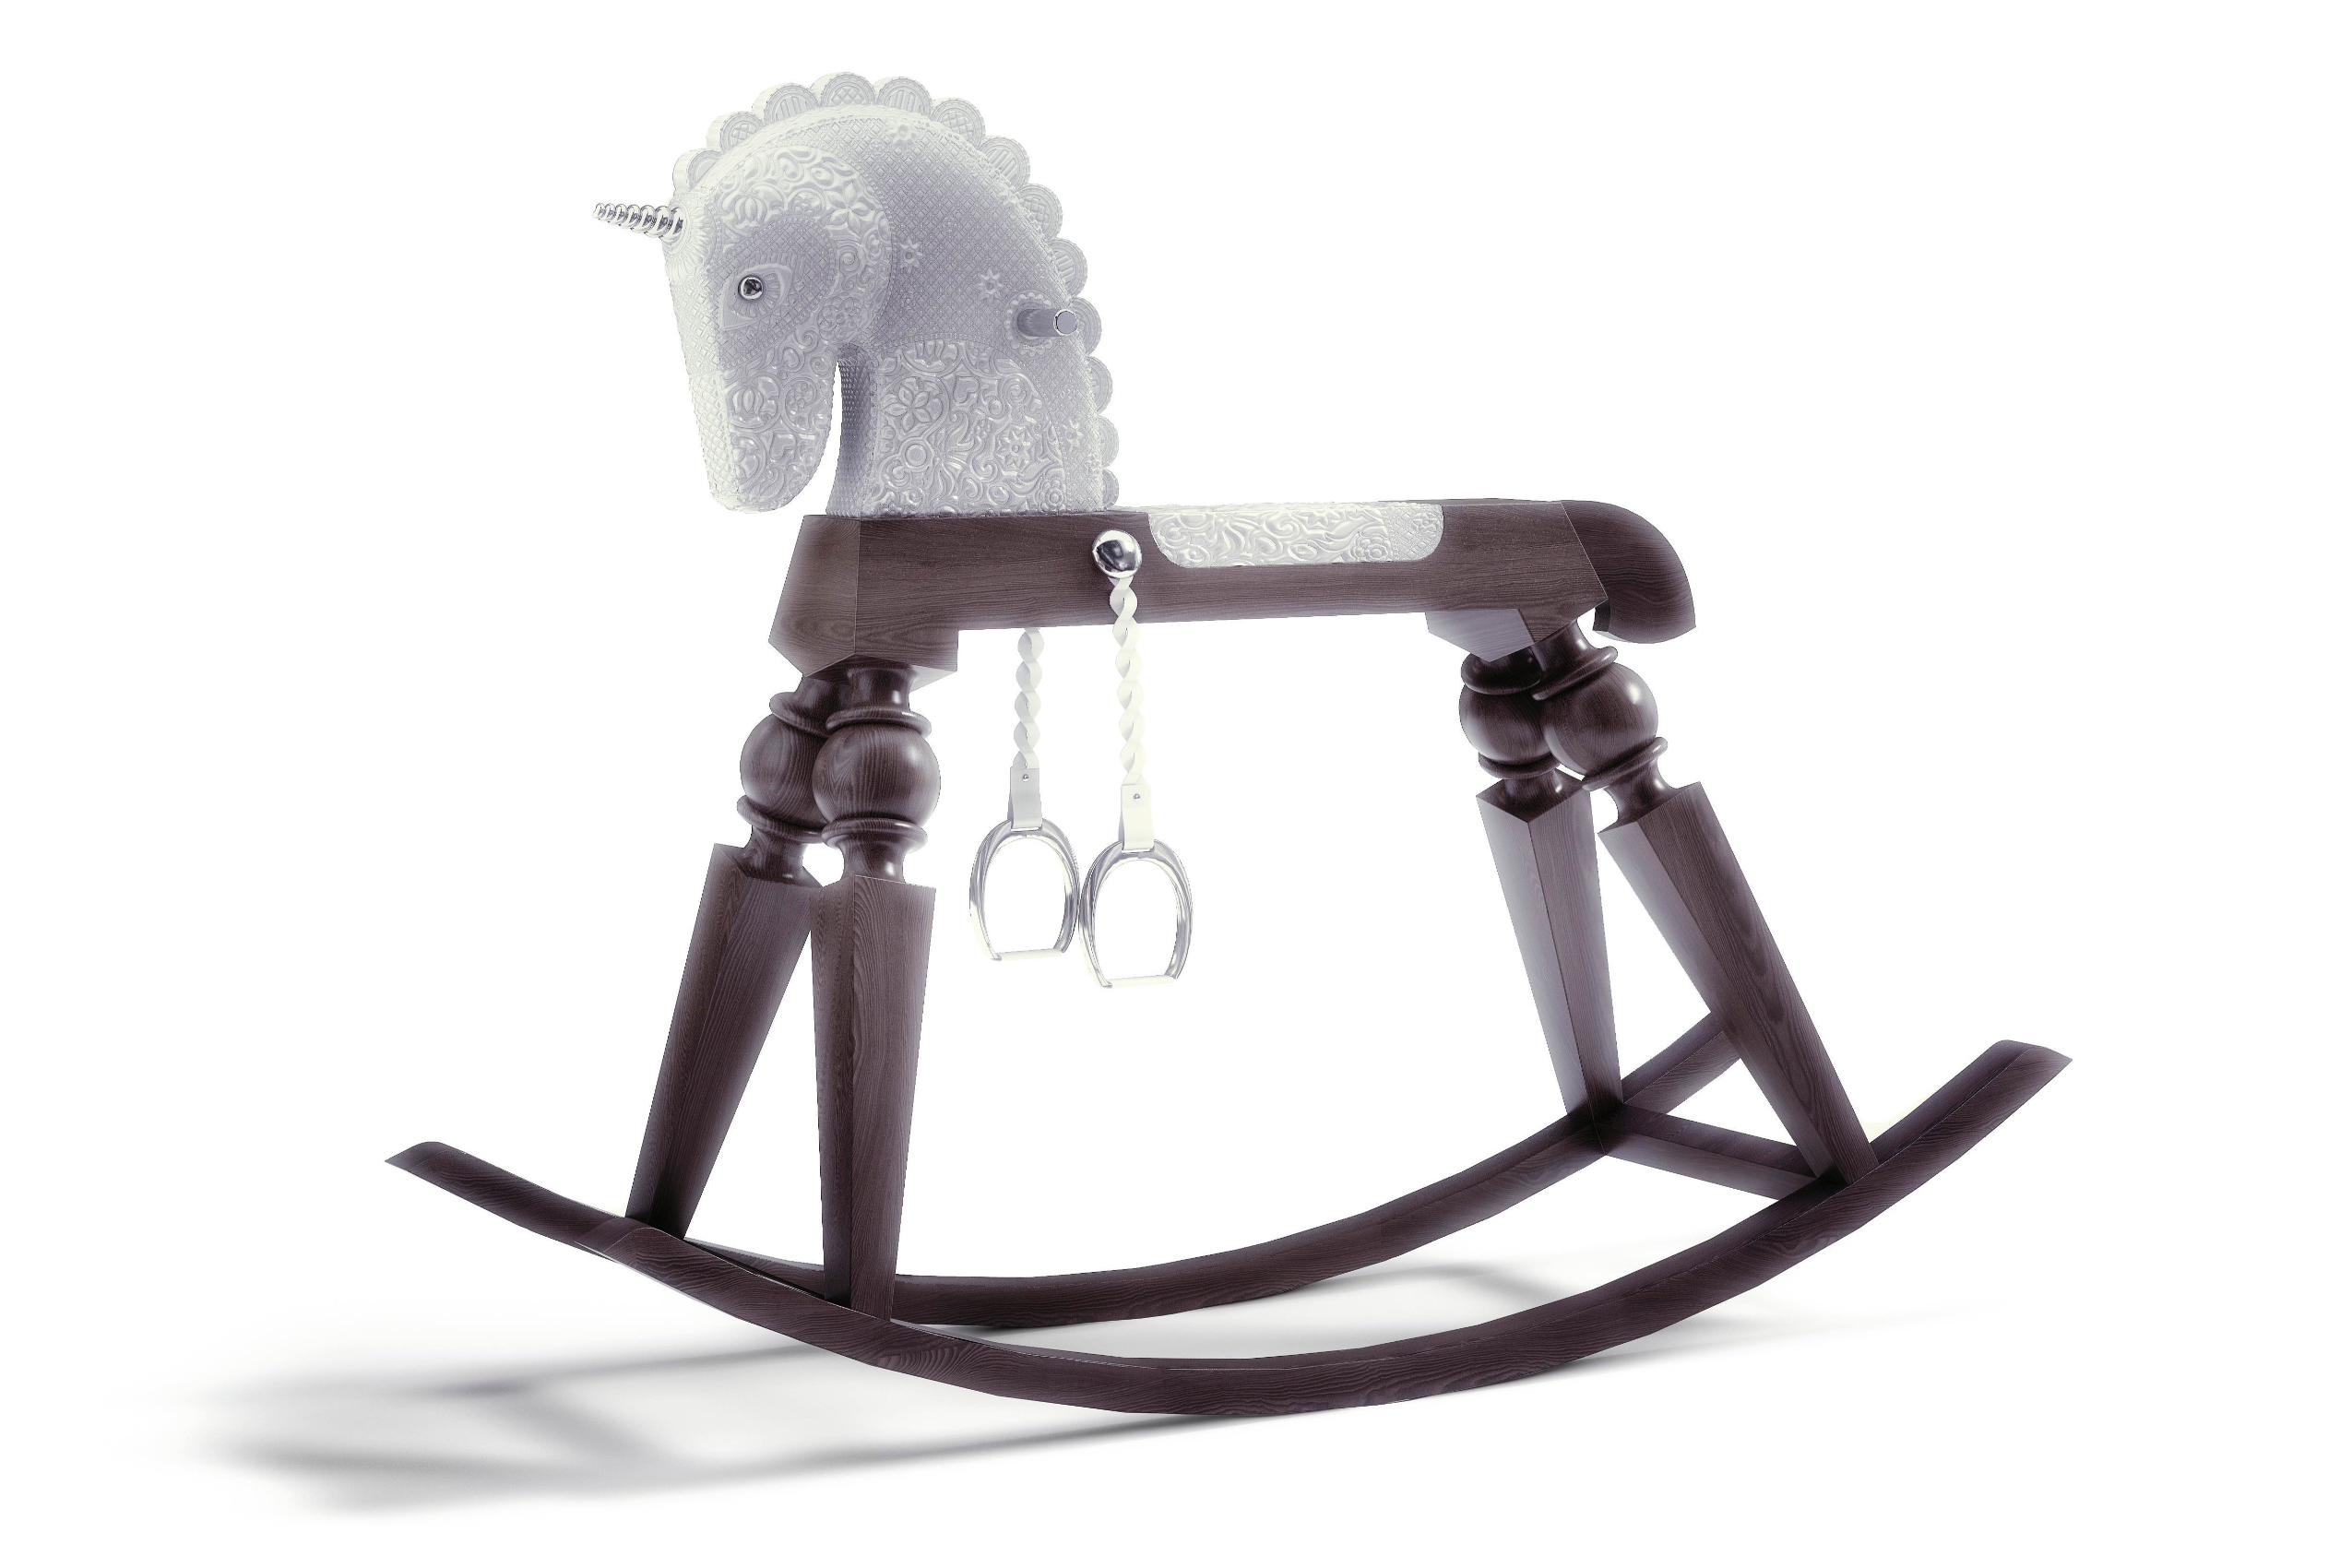 Arion 摇摇马是 Marcel 推出的限量款设计，雕花图腾加上传统马鞍马具，让玩具也能充满古典情怀。